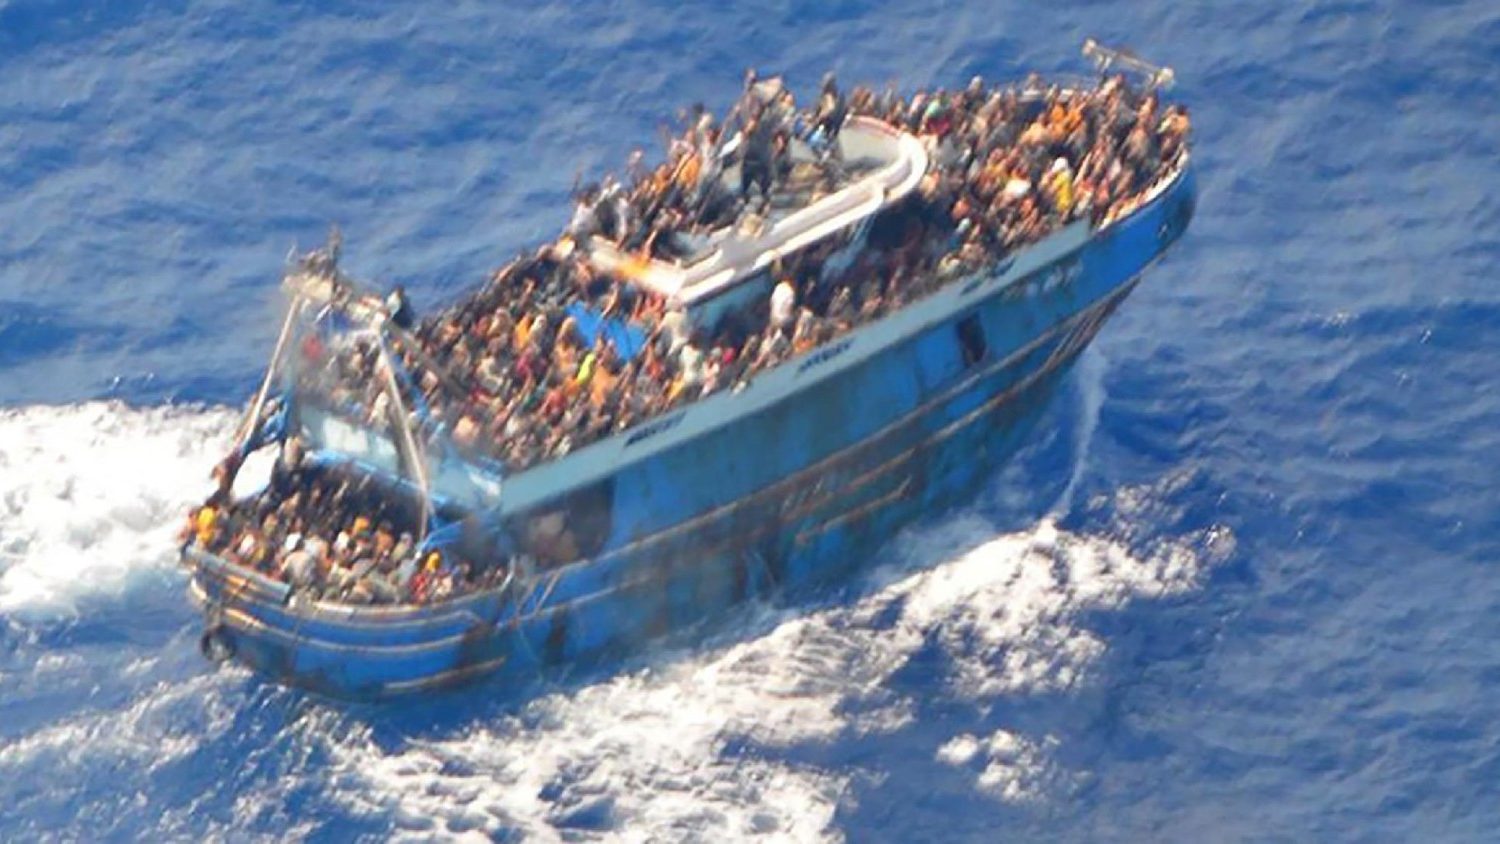 Upaya harus dilakukan untuk mengintegrasikan imigran ke dalam negara – Berita Vatikan